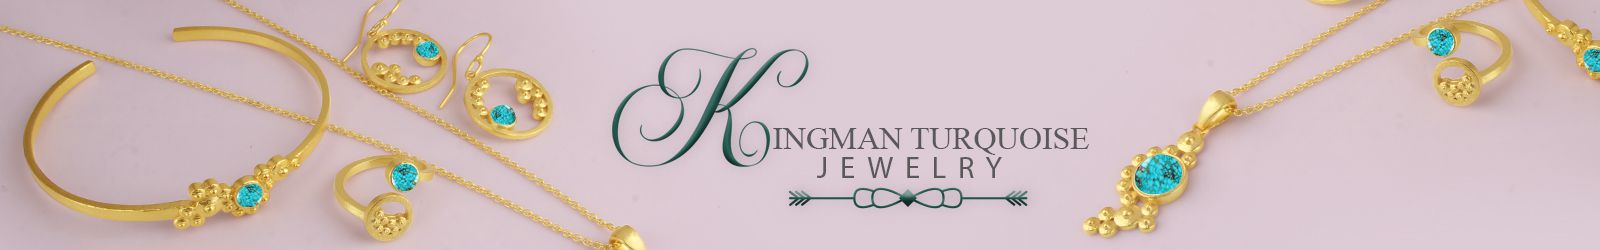 Wholesale Kingman Turquoise Jewelry